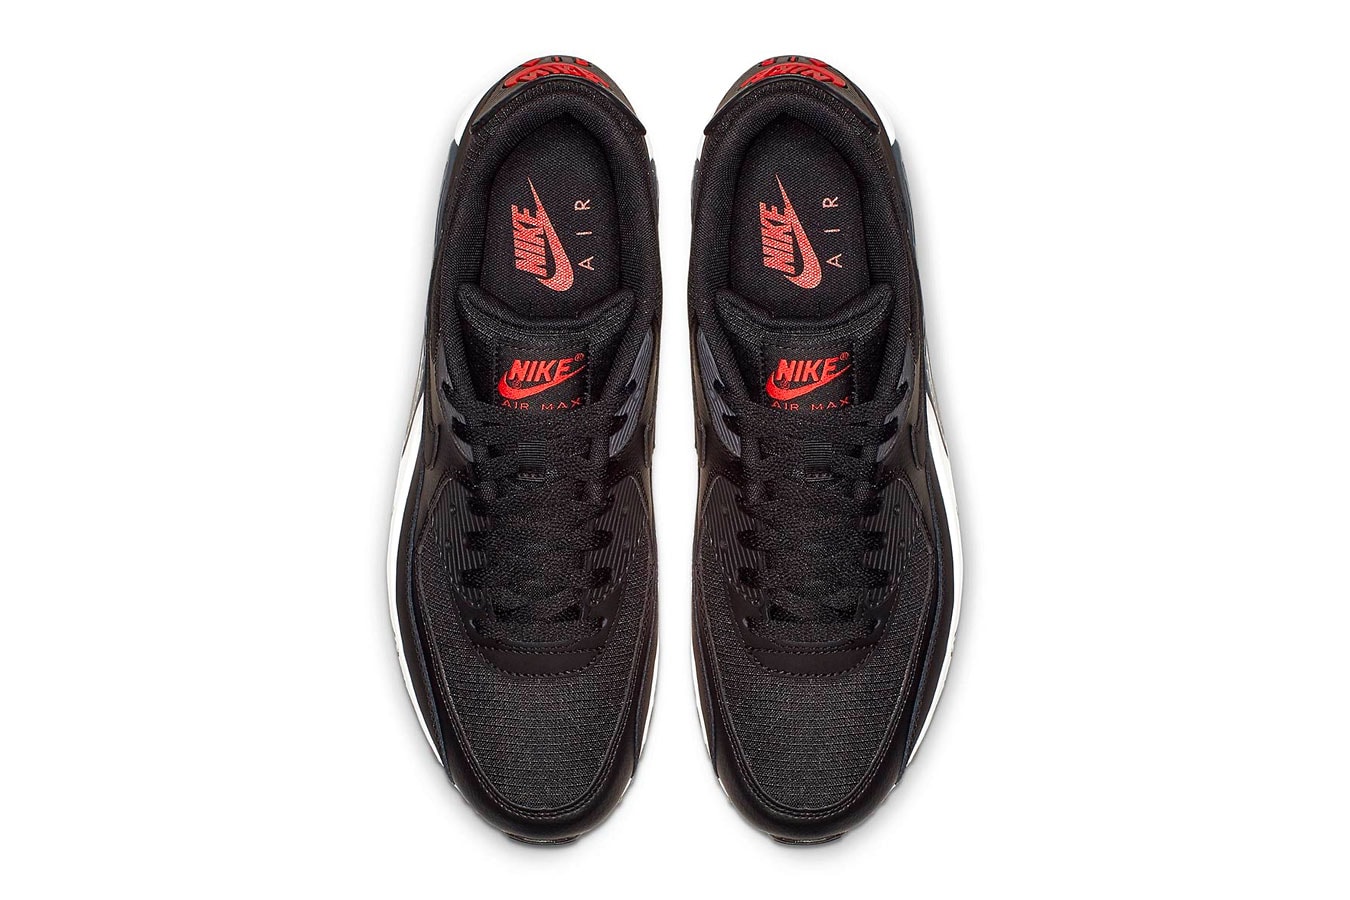 Nike Air Max 90 "Hot Habanero" Release swoosh black red white